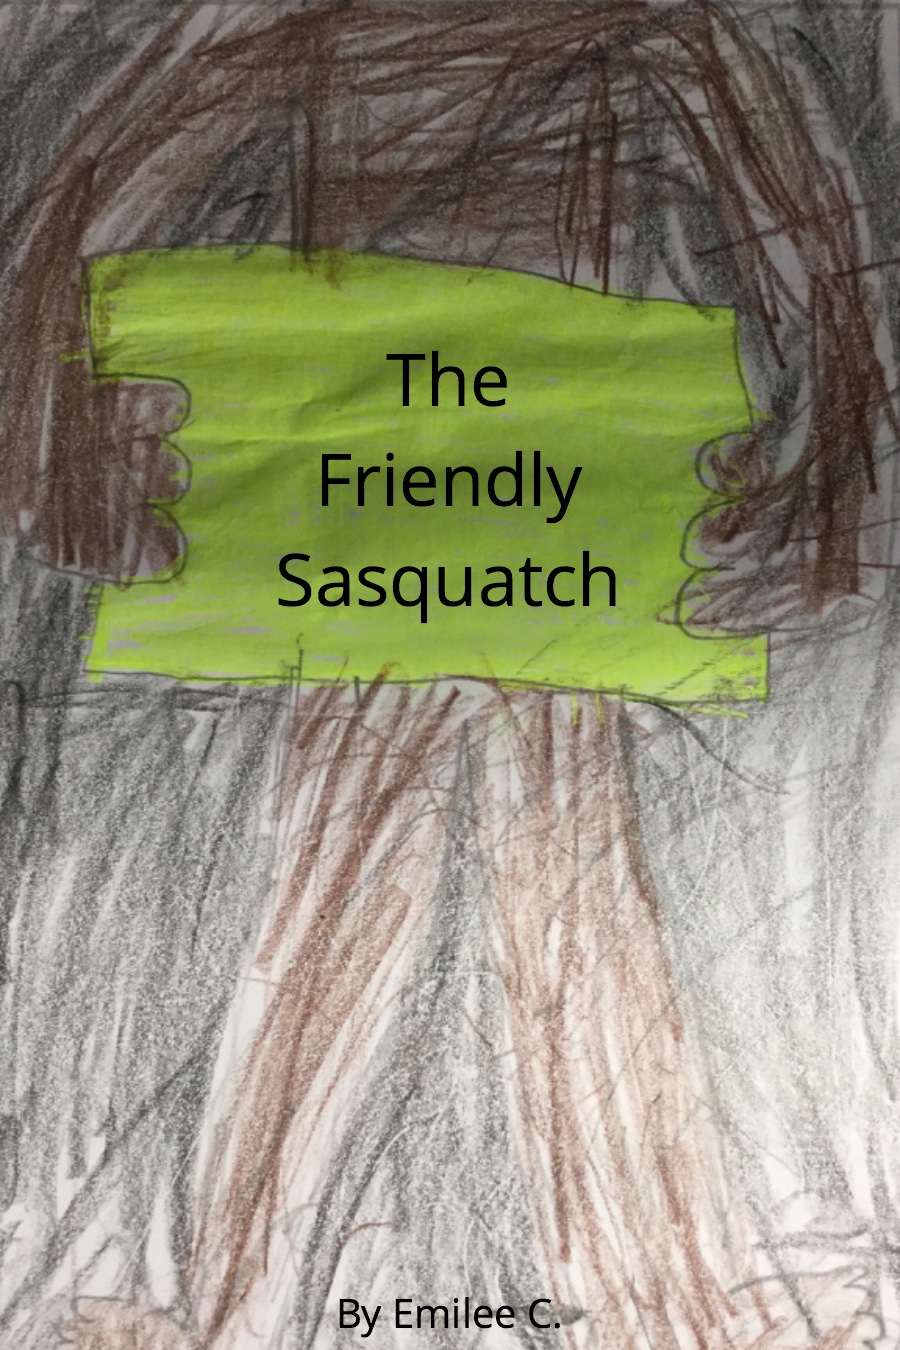 The Friendly Sasquatch by Emilee C